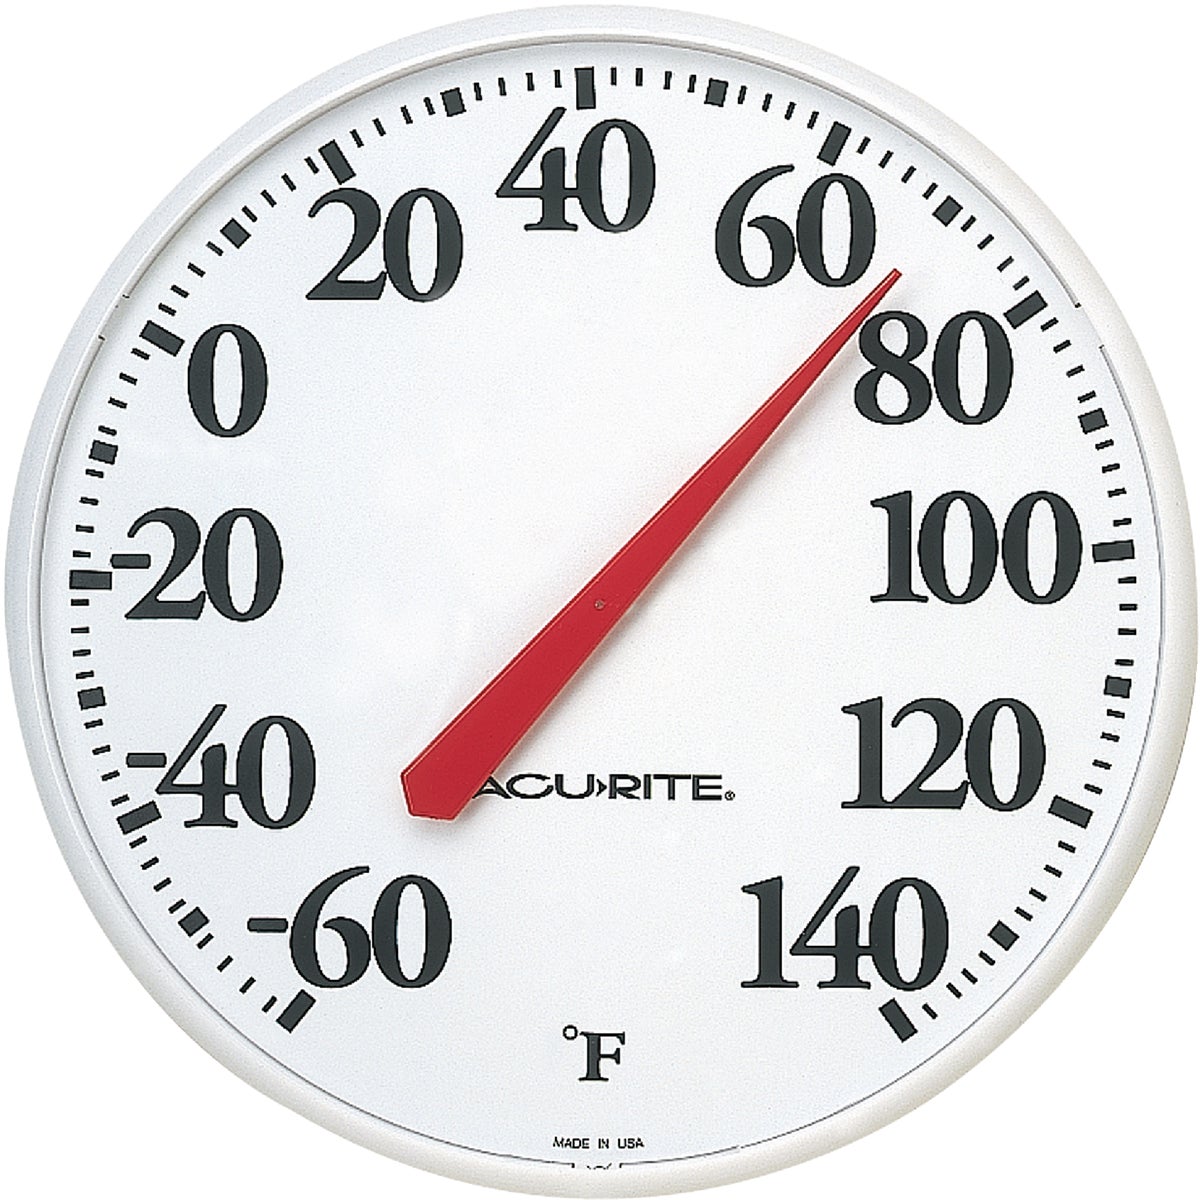 Indoor & Outdoor Thermometers